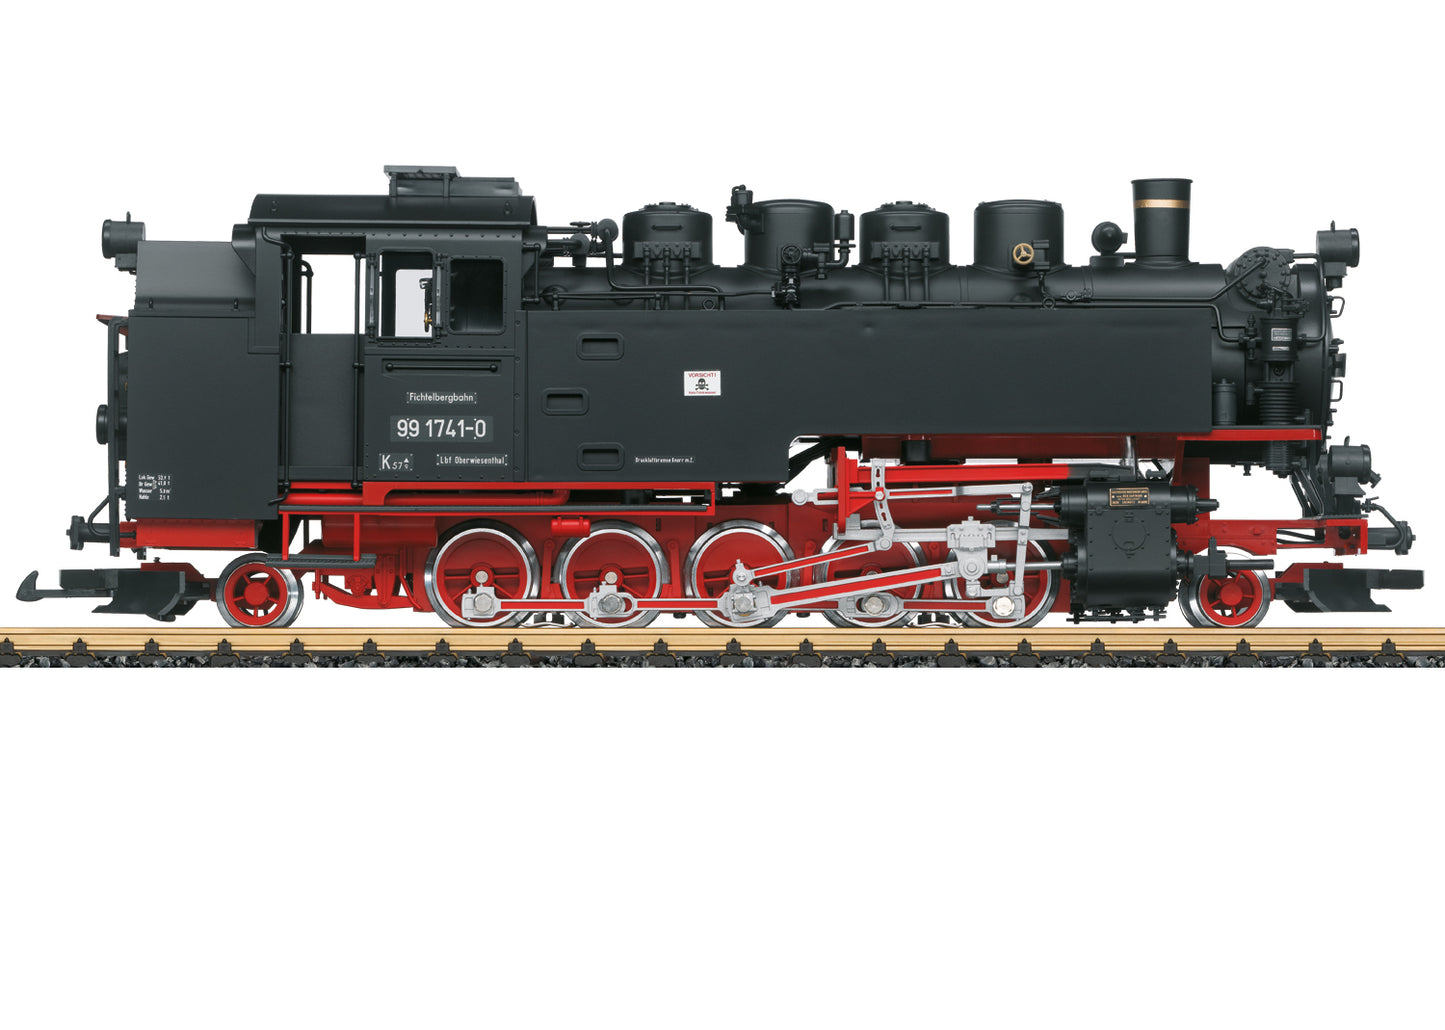 LGB 21481 - SDG Steam Locomotive, Road Number 99 1741